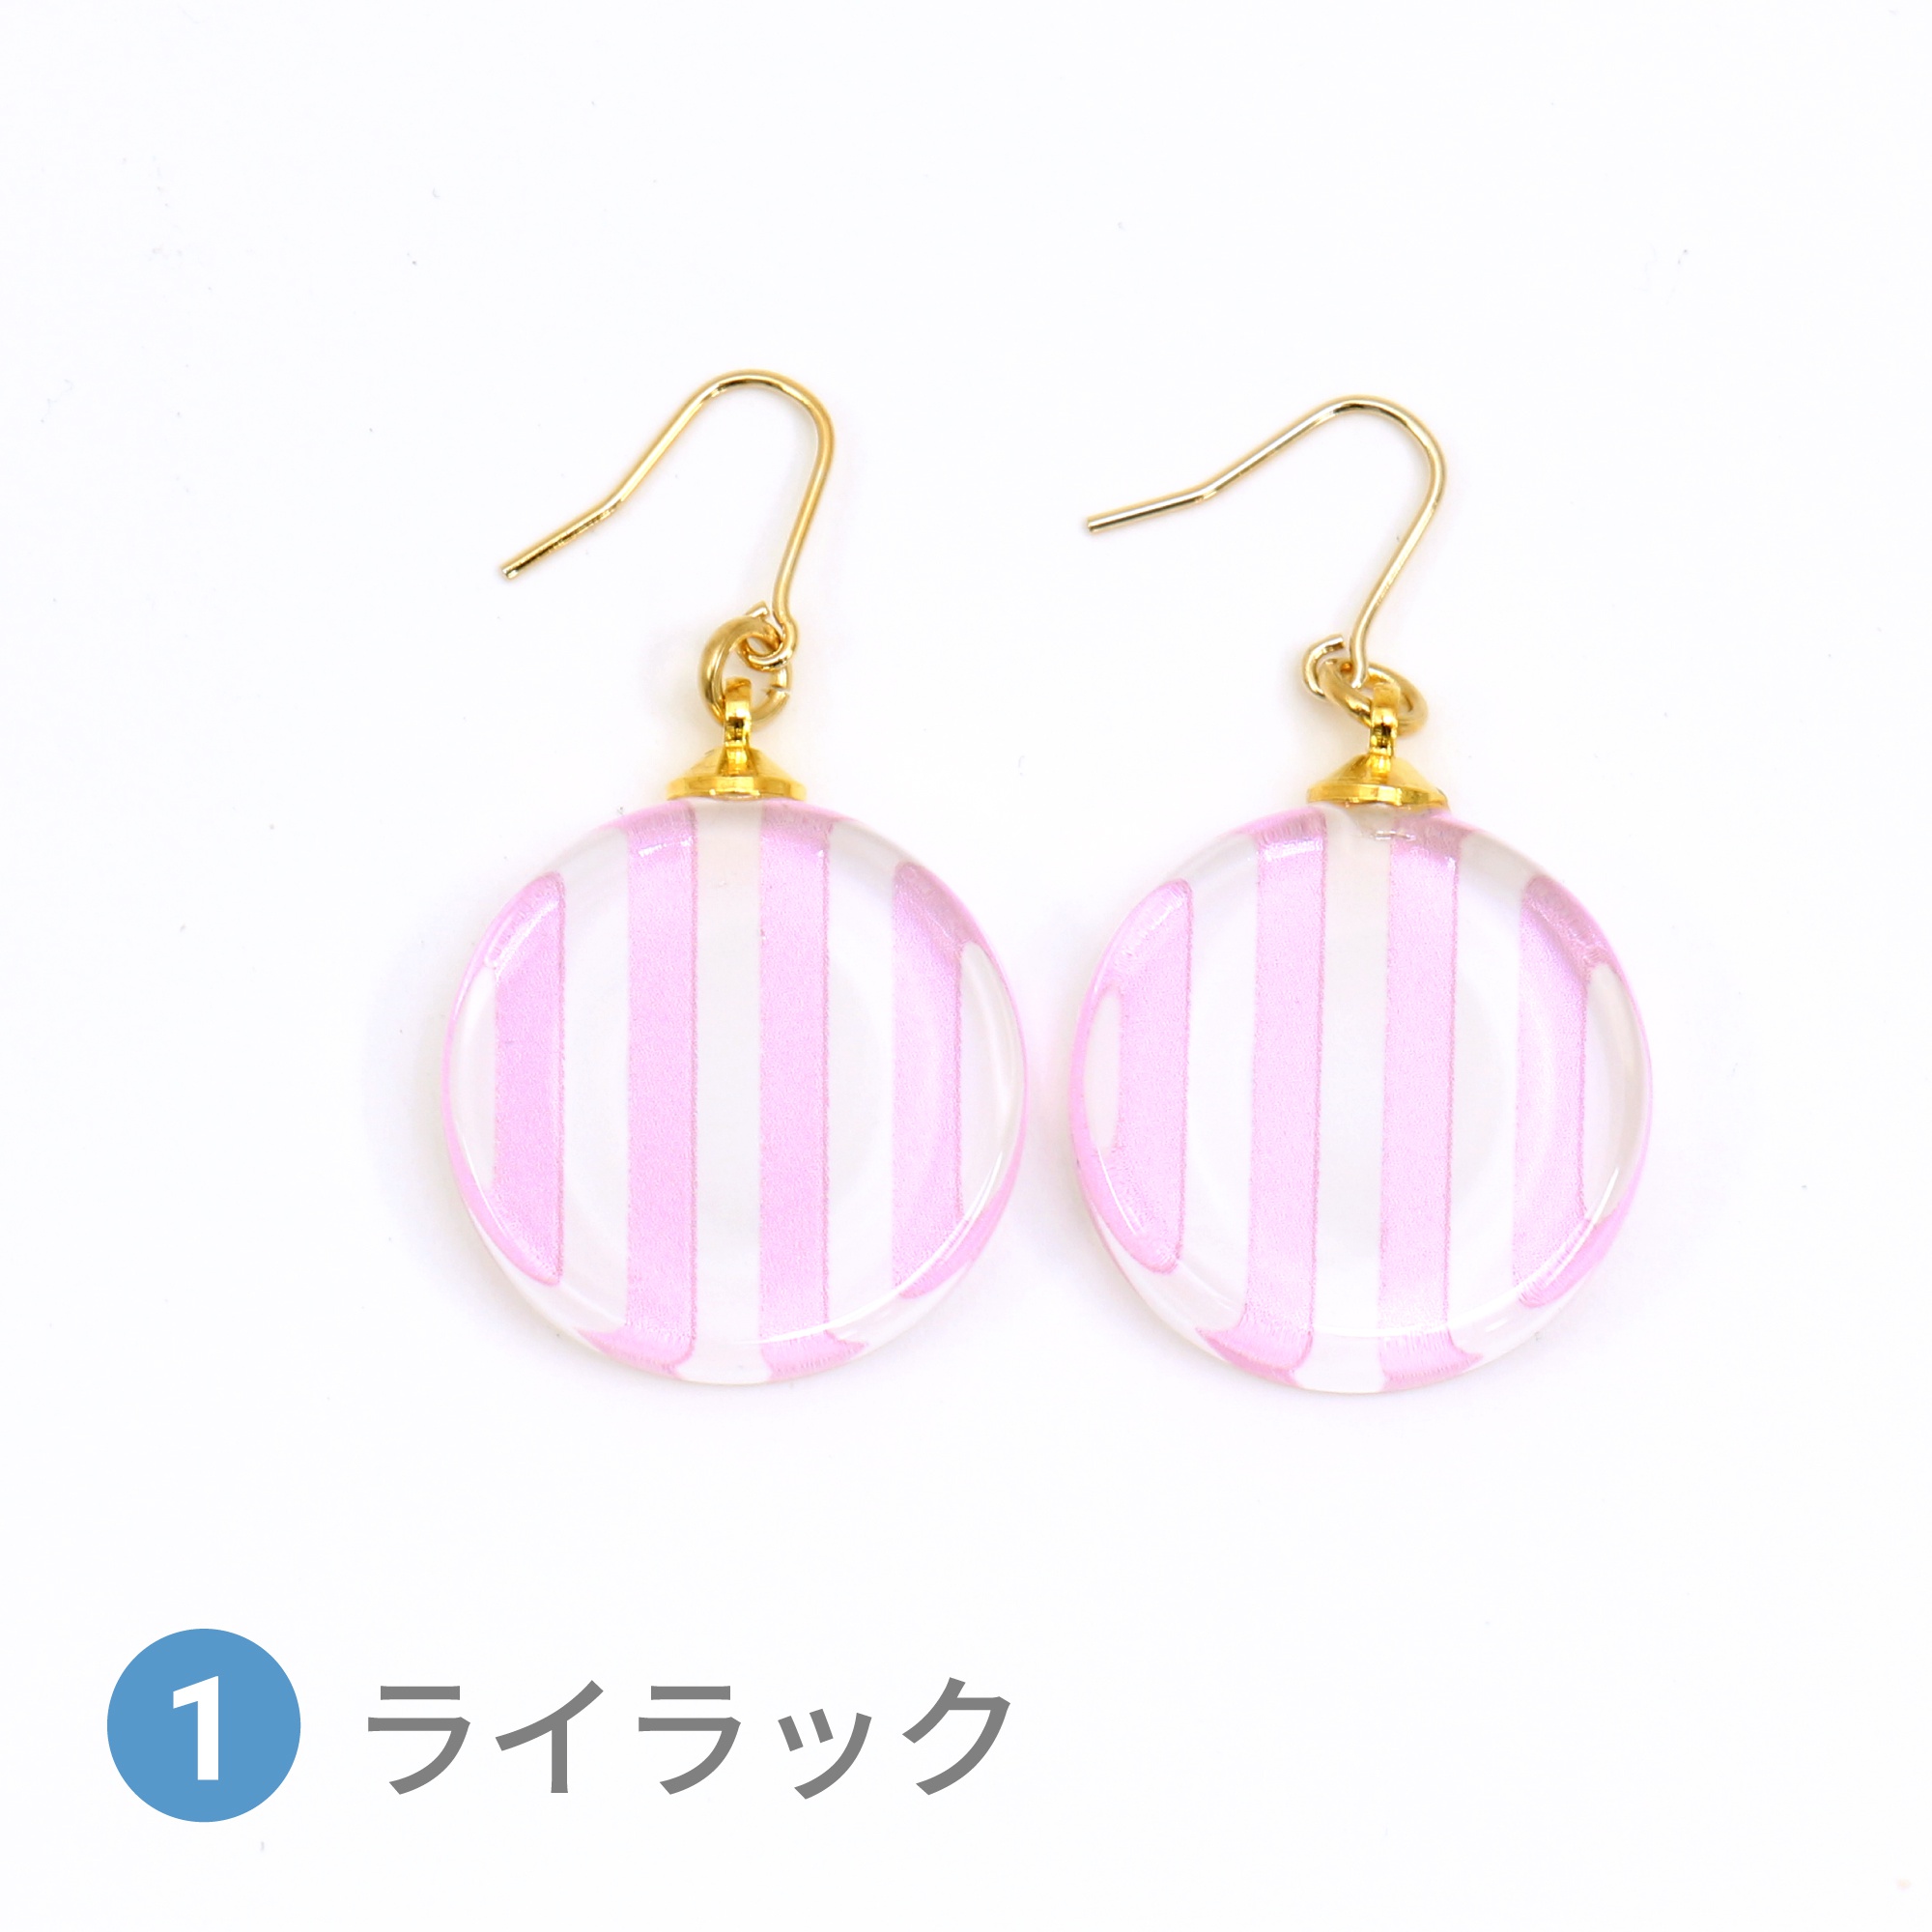 Glass accessories Pierced Earring STRIPE lilac round shape